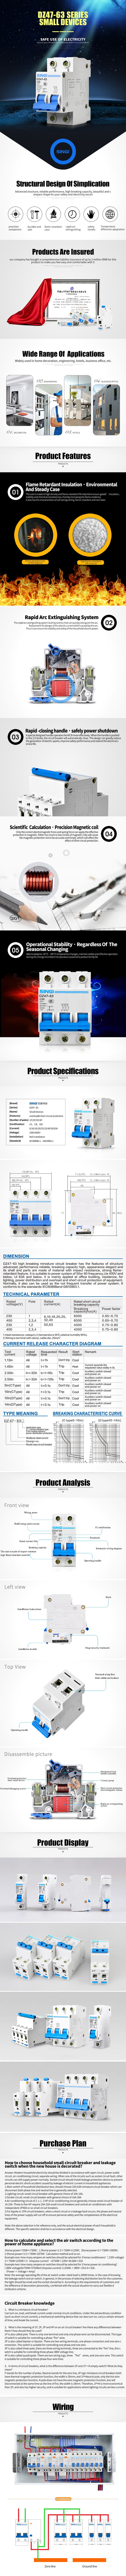 DZ47-63 MCB miniature circuit breaker